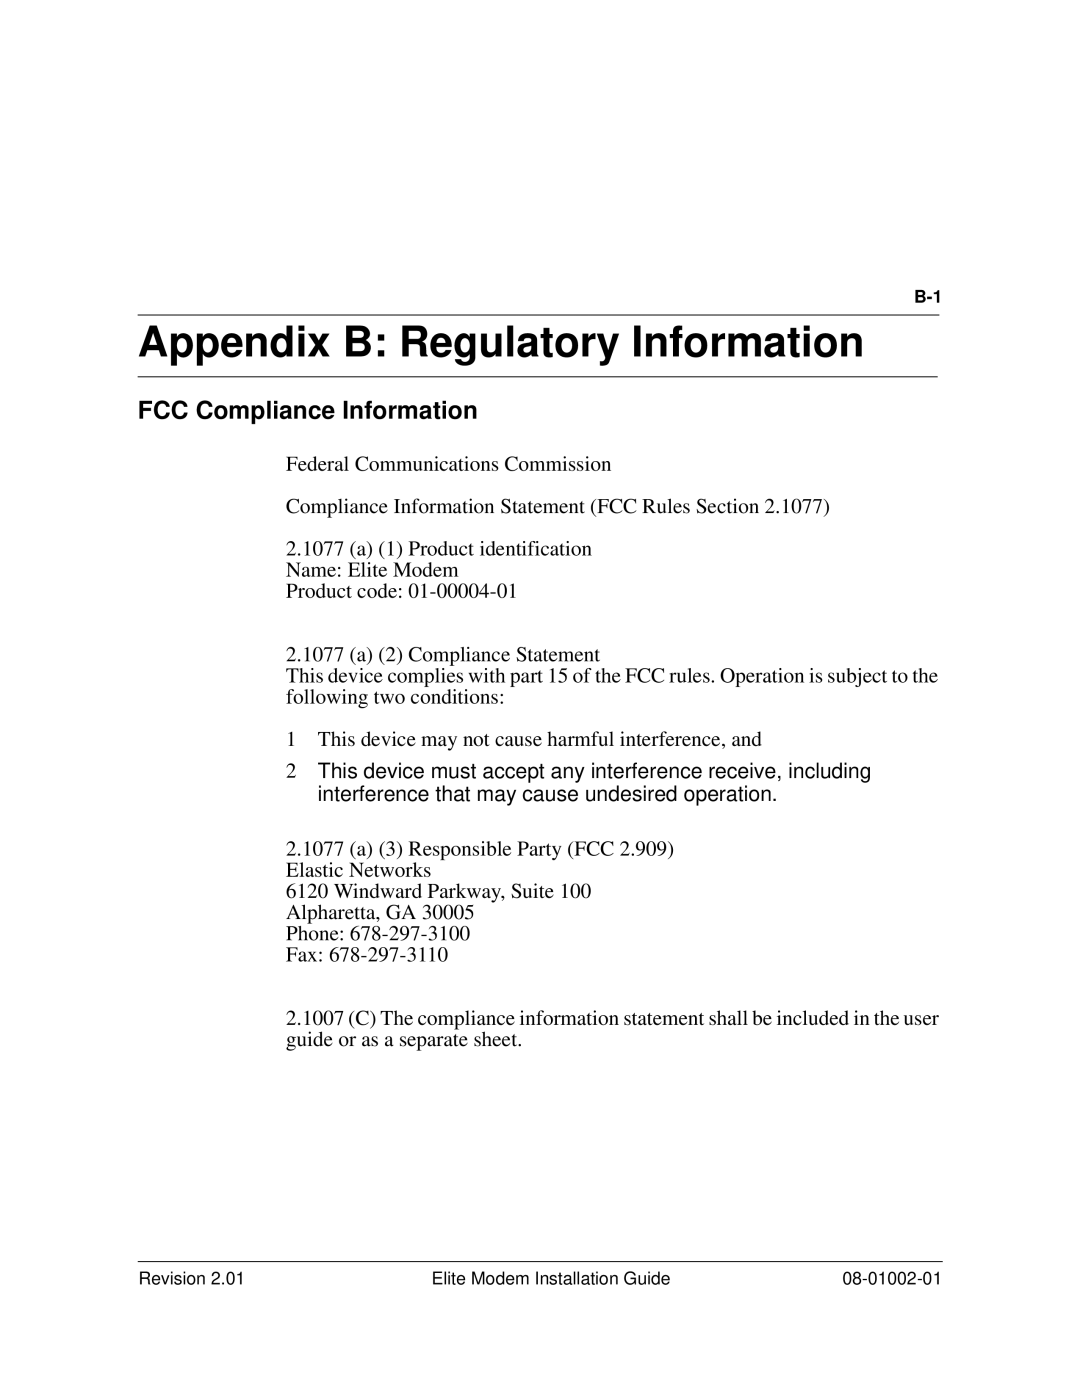 Zhone Technologies 08-01002-01 manual Appendix B Regulatory Information B, FCC Compliance Information 